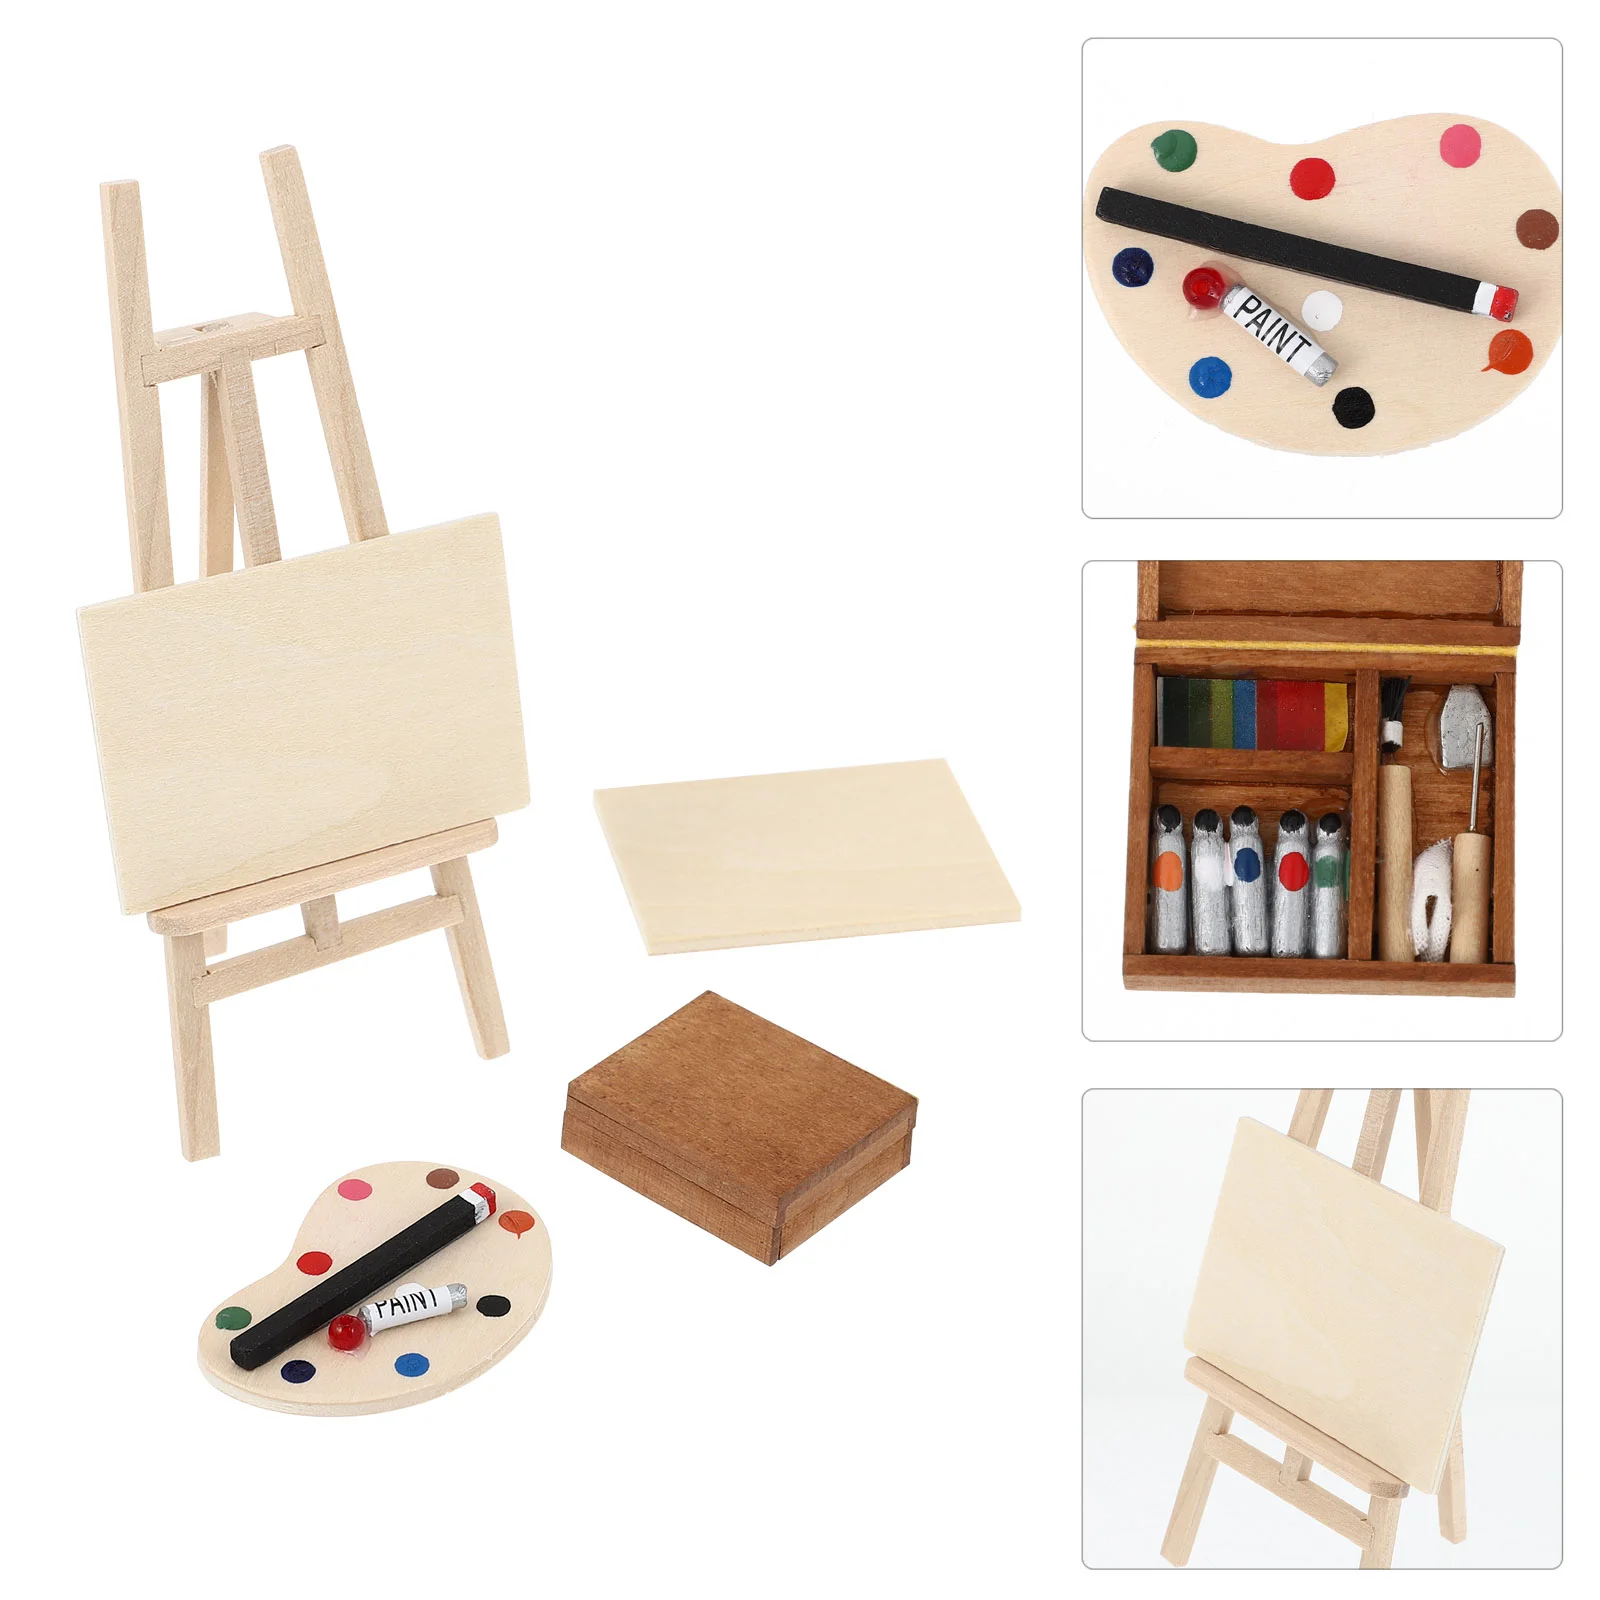 

4 Pcs Wooden Easel Drawing Board Mini Landscape Model House Furniture Decorate Palette Adornment